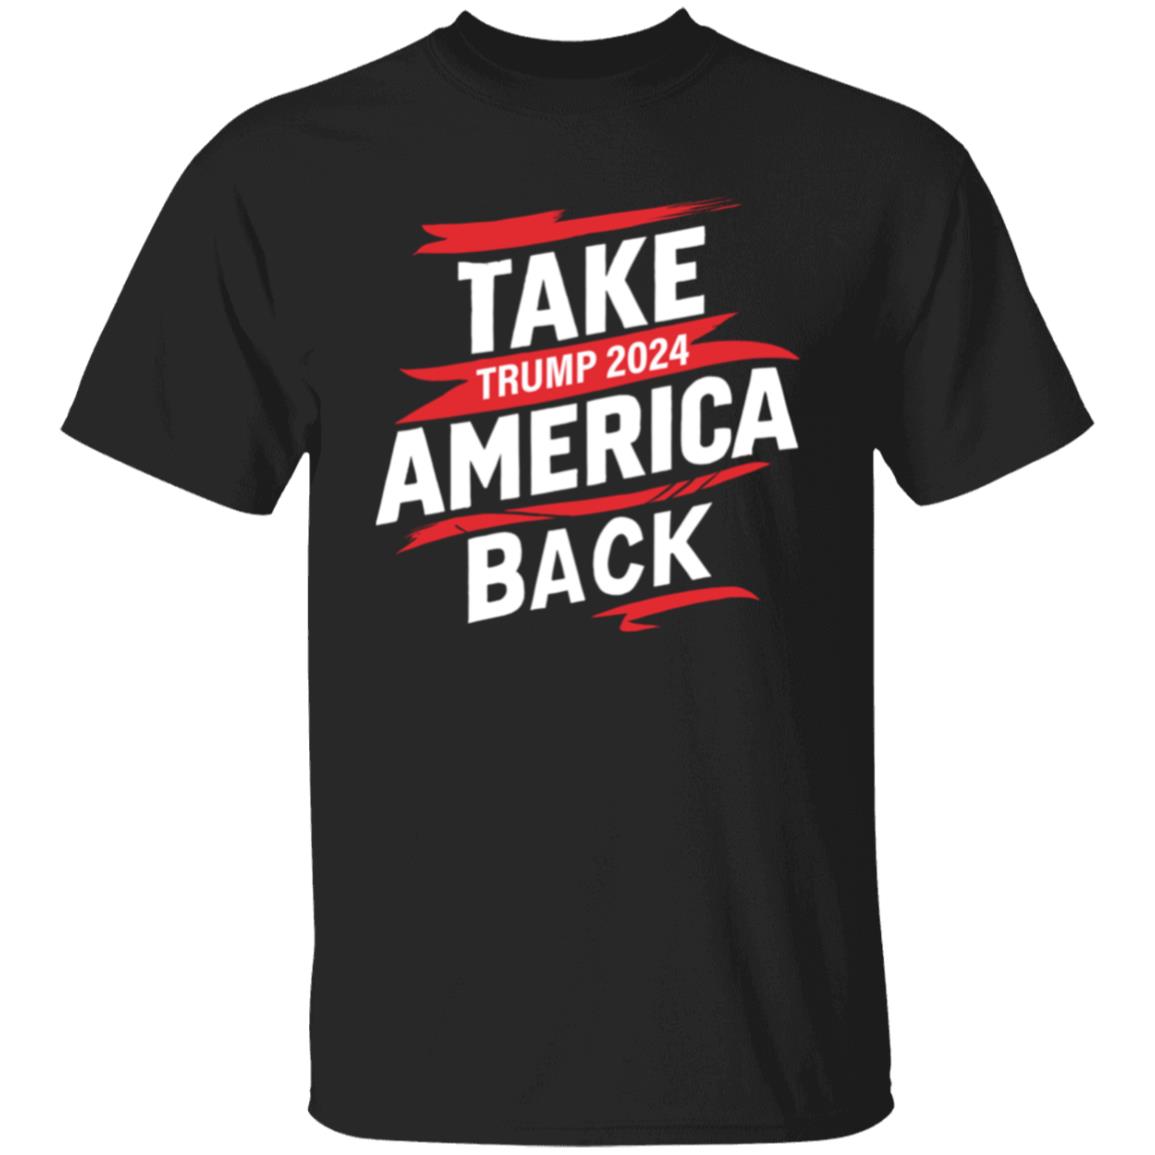 Take America Back T-Shirt